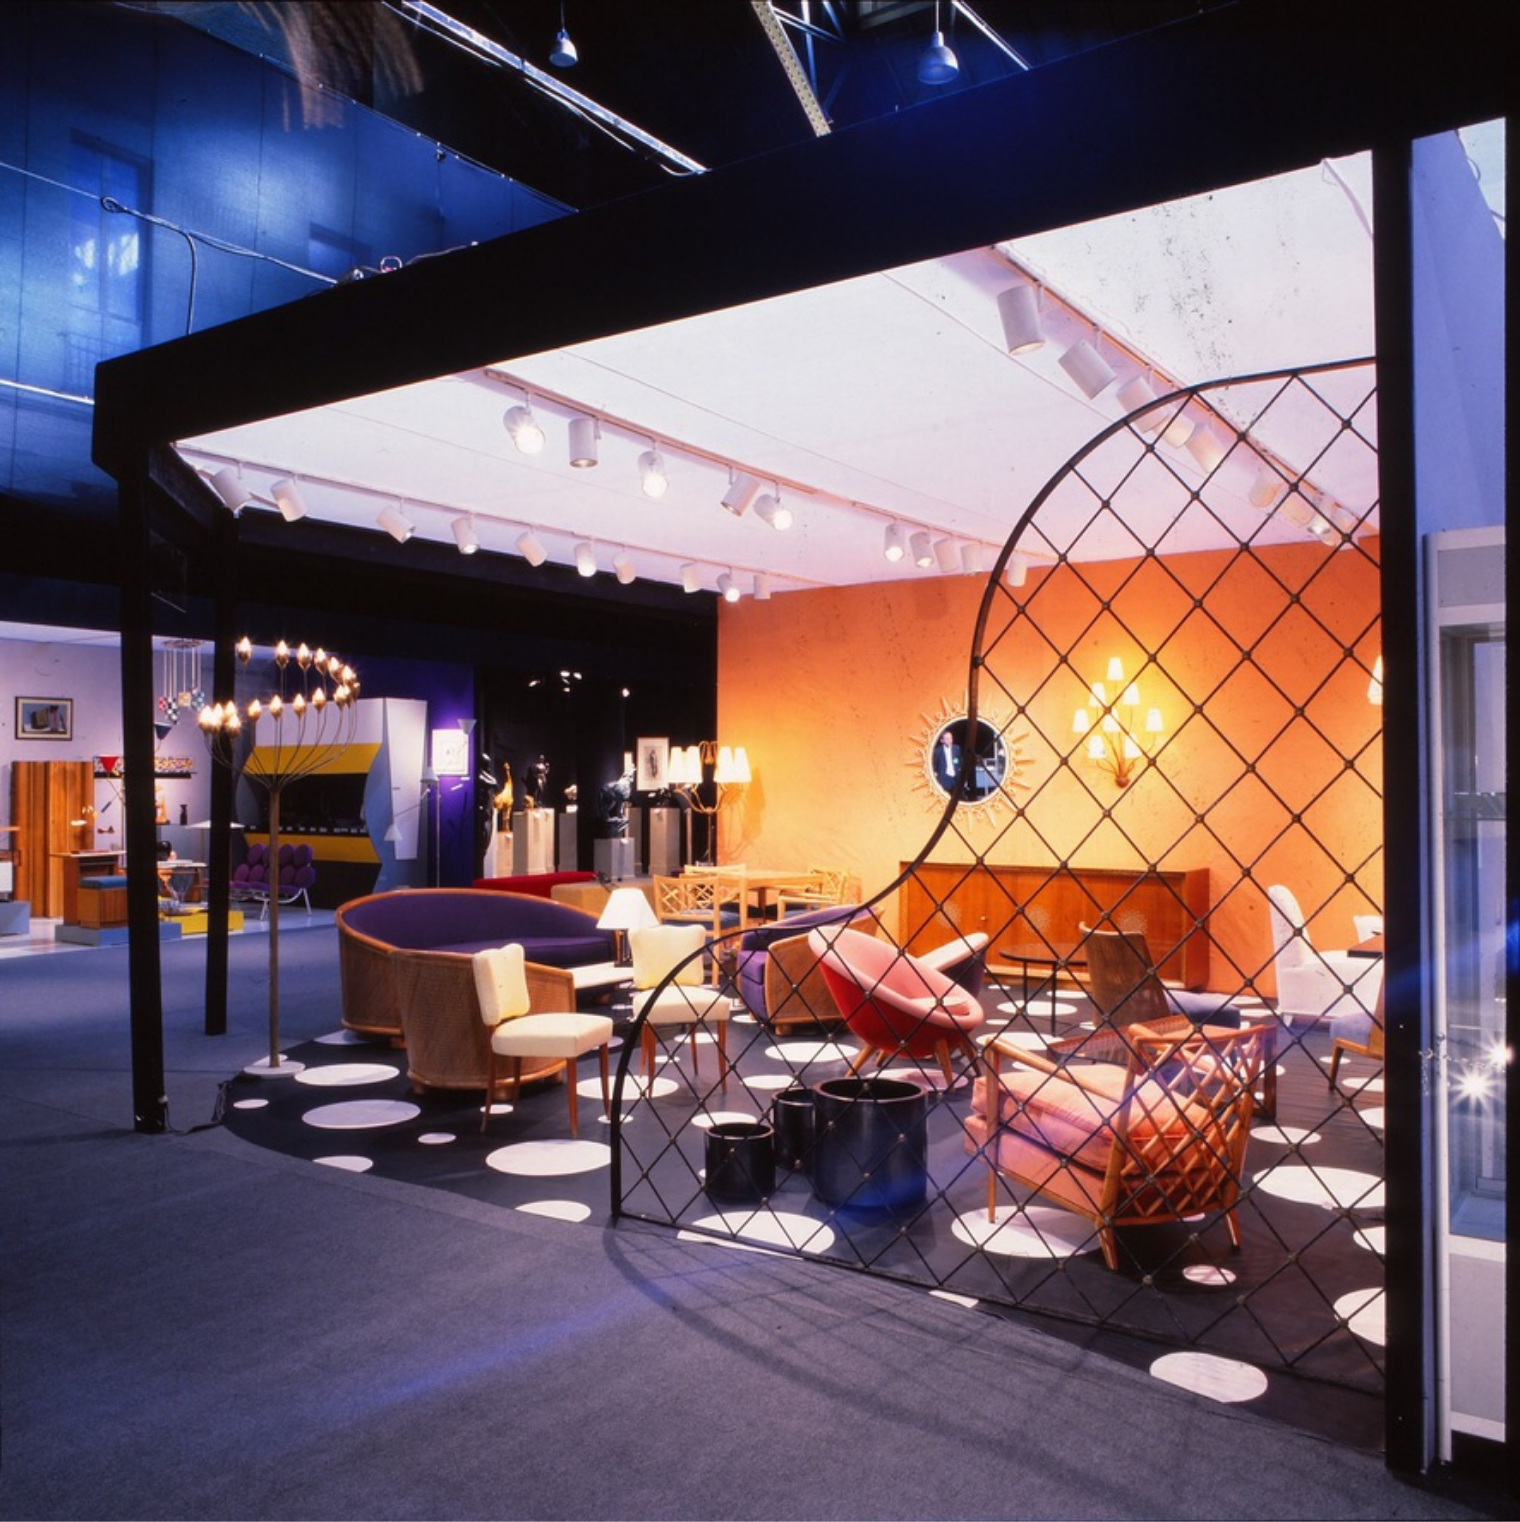 Galerie de Beyrie : XX century Haughton Show, Park Avenue Armory, New York, 2000